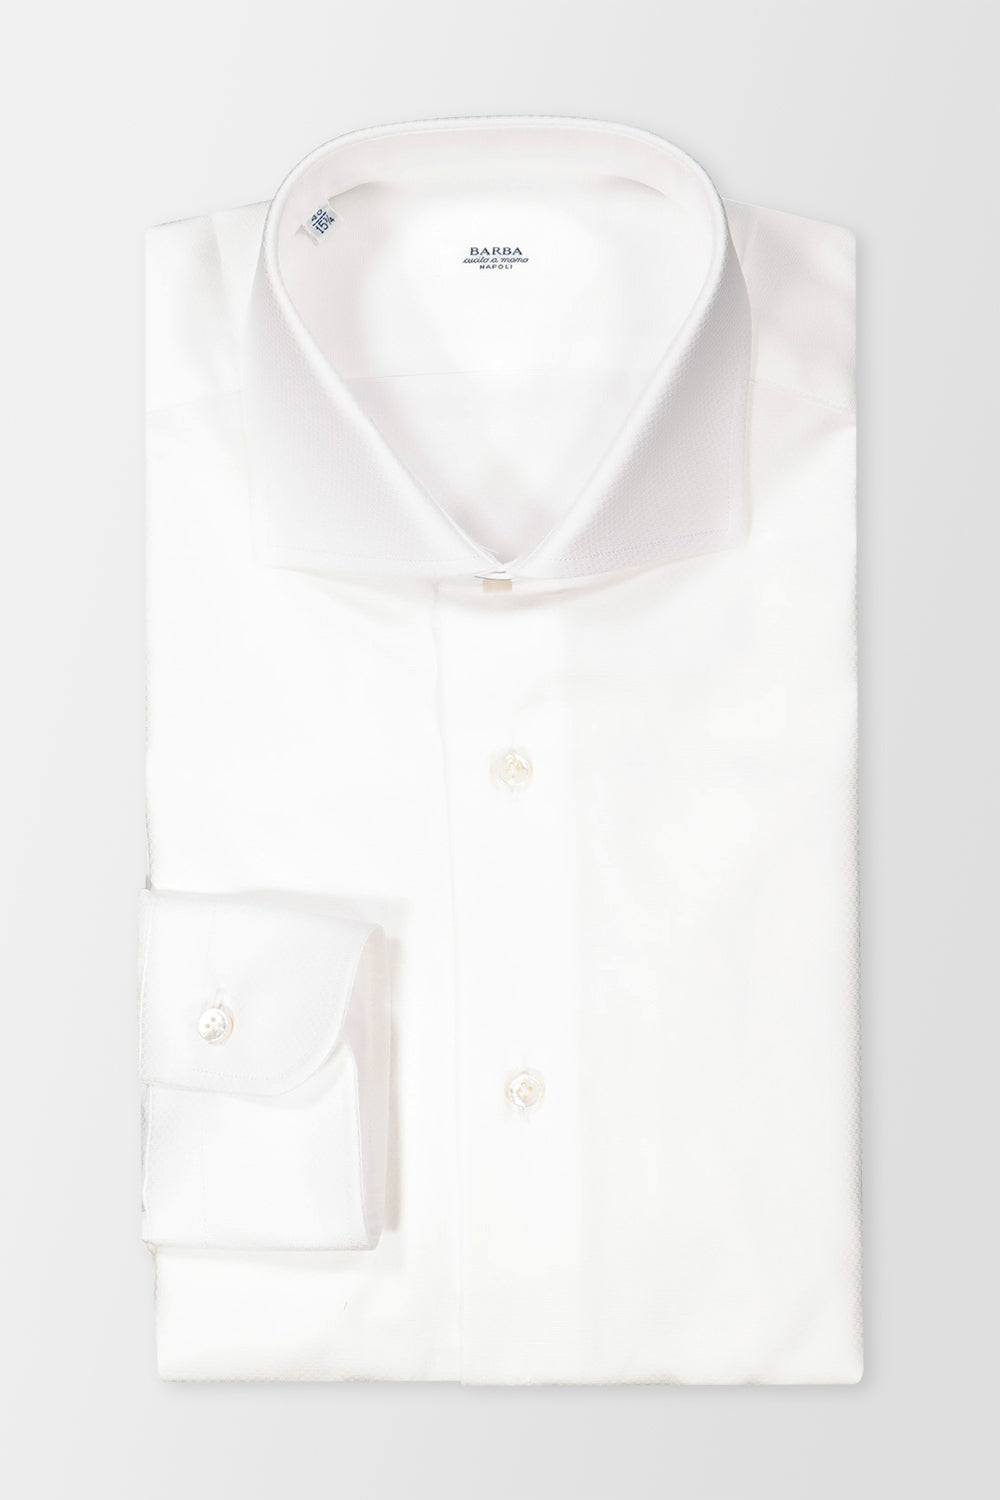 Barba Napoli White Classic Shirt